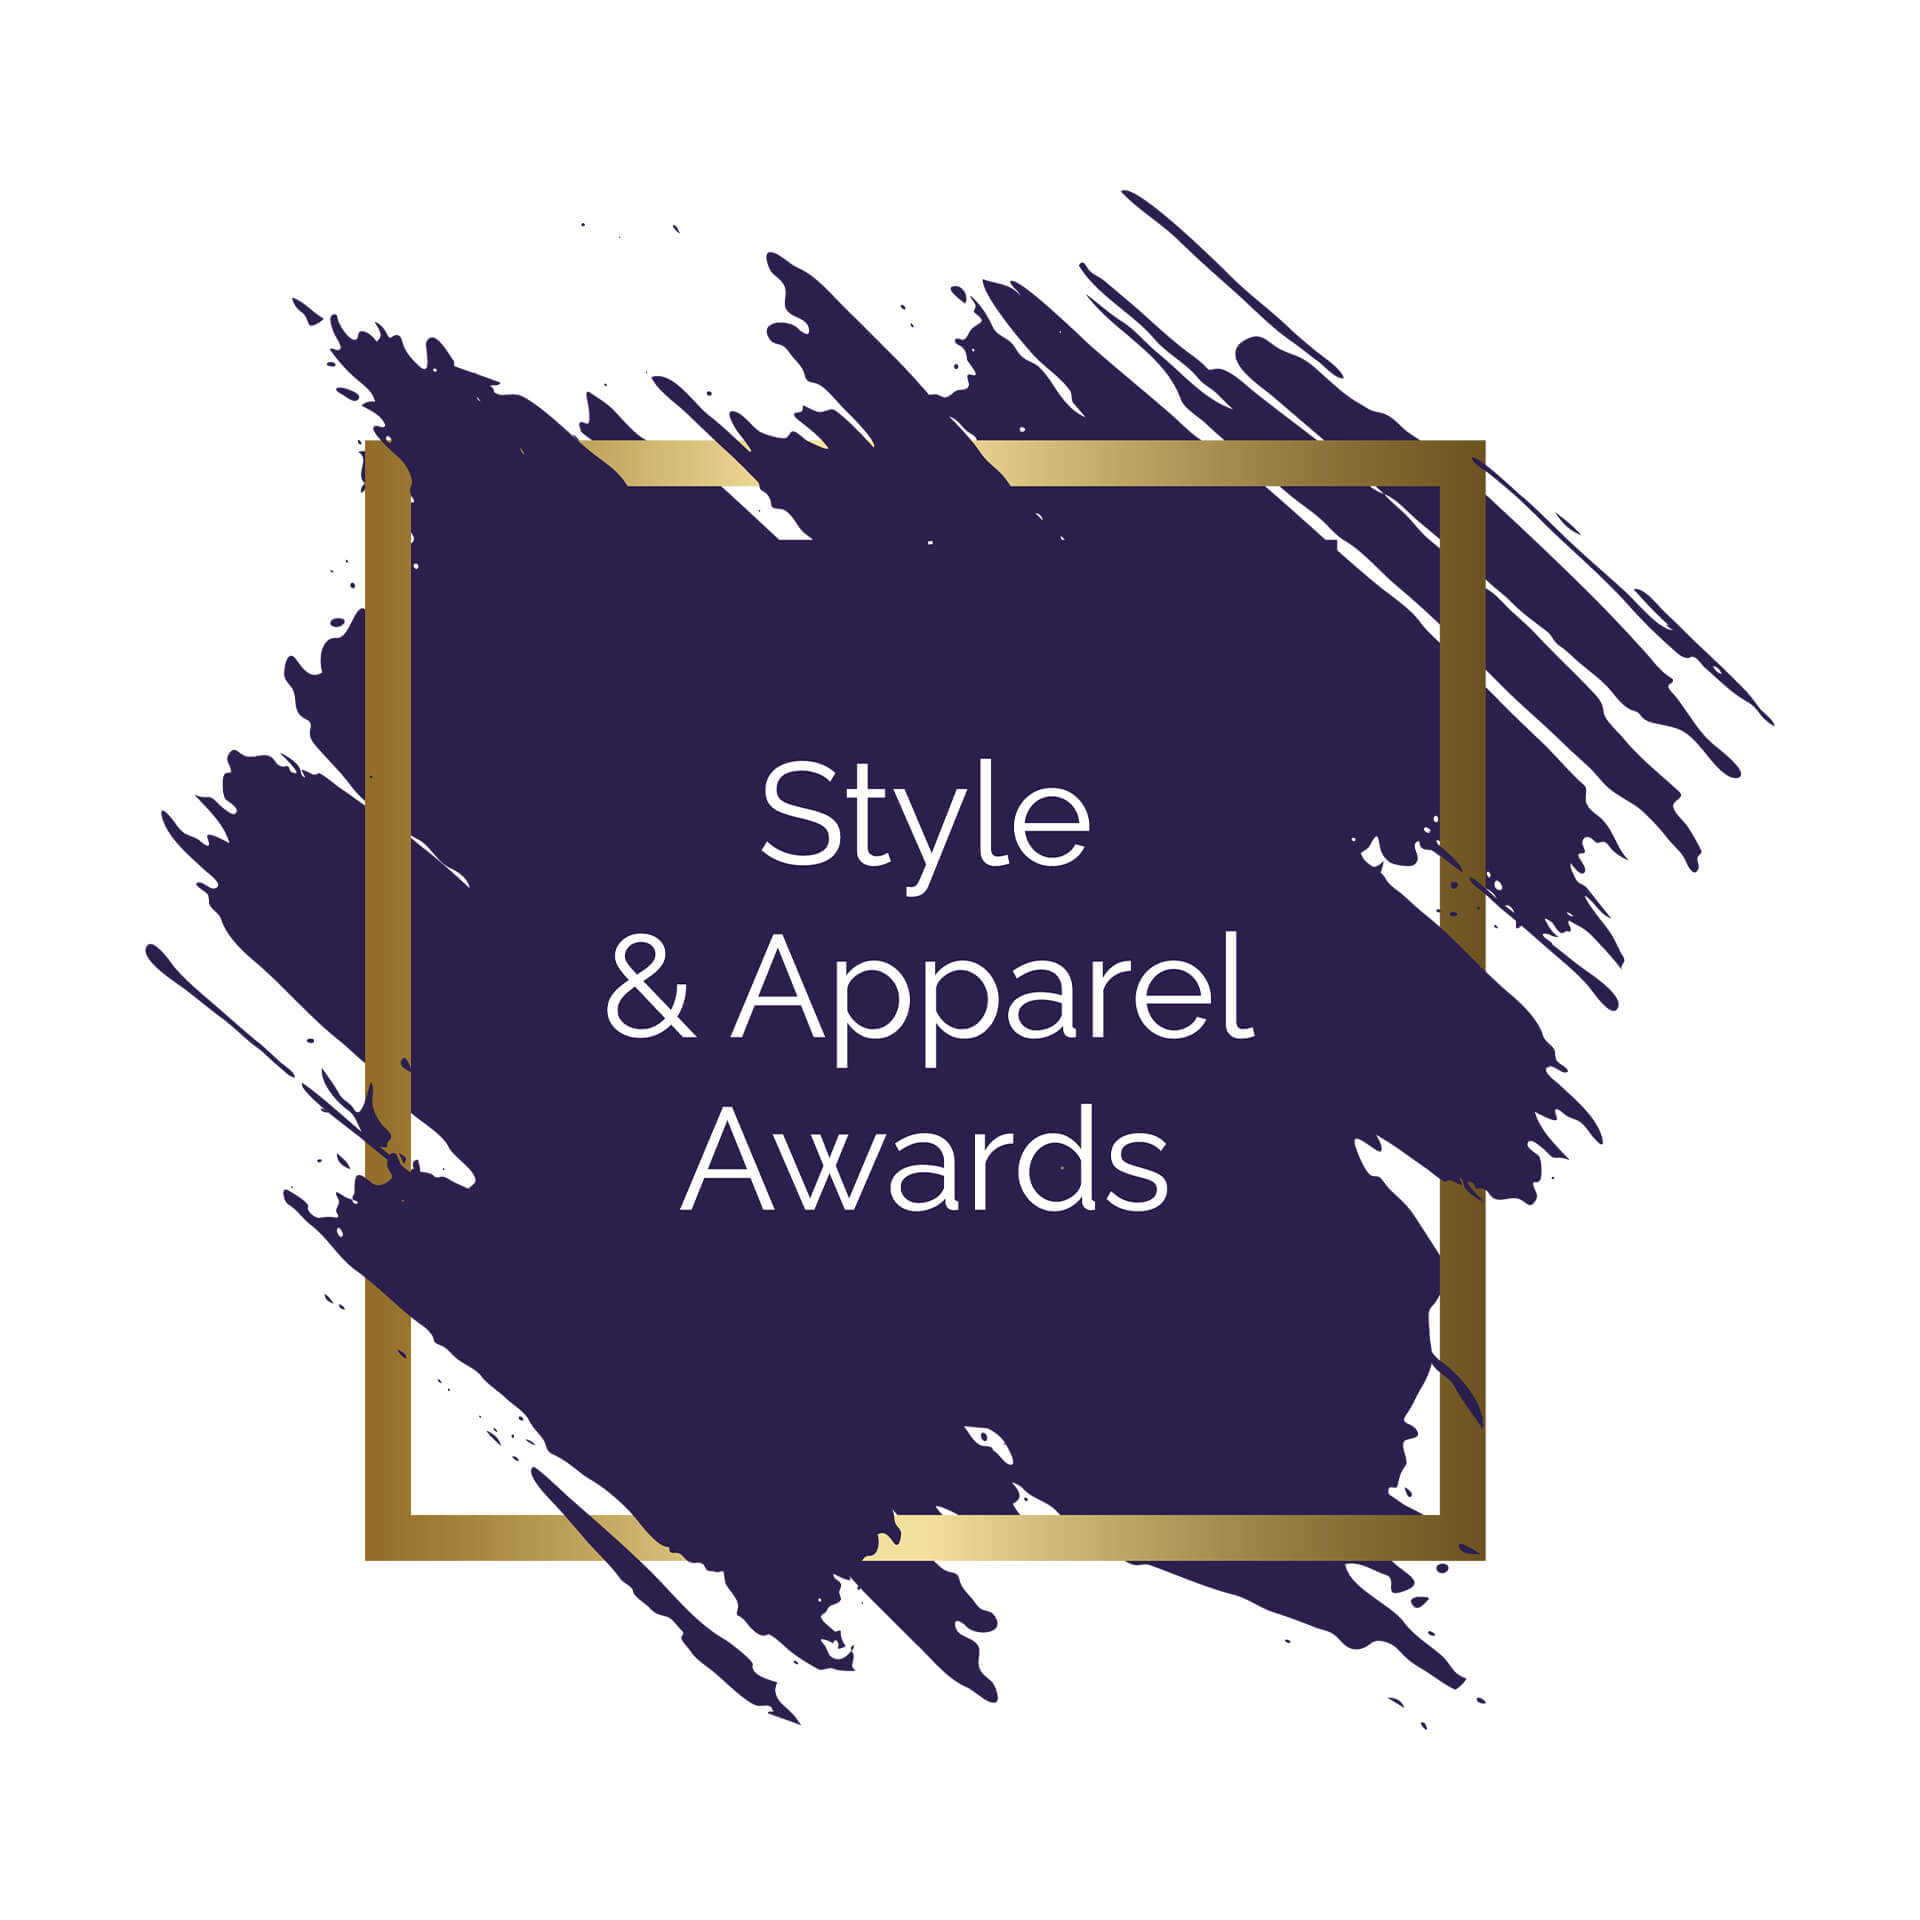 Style & Apparel Awards